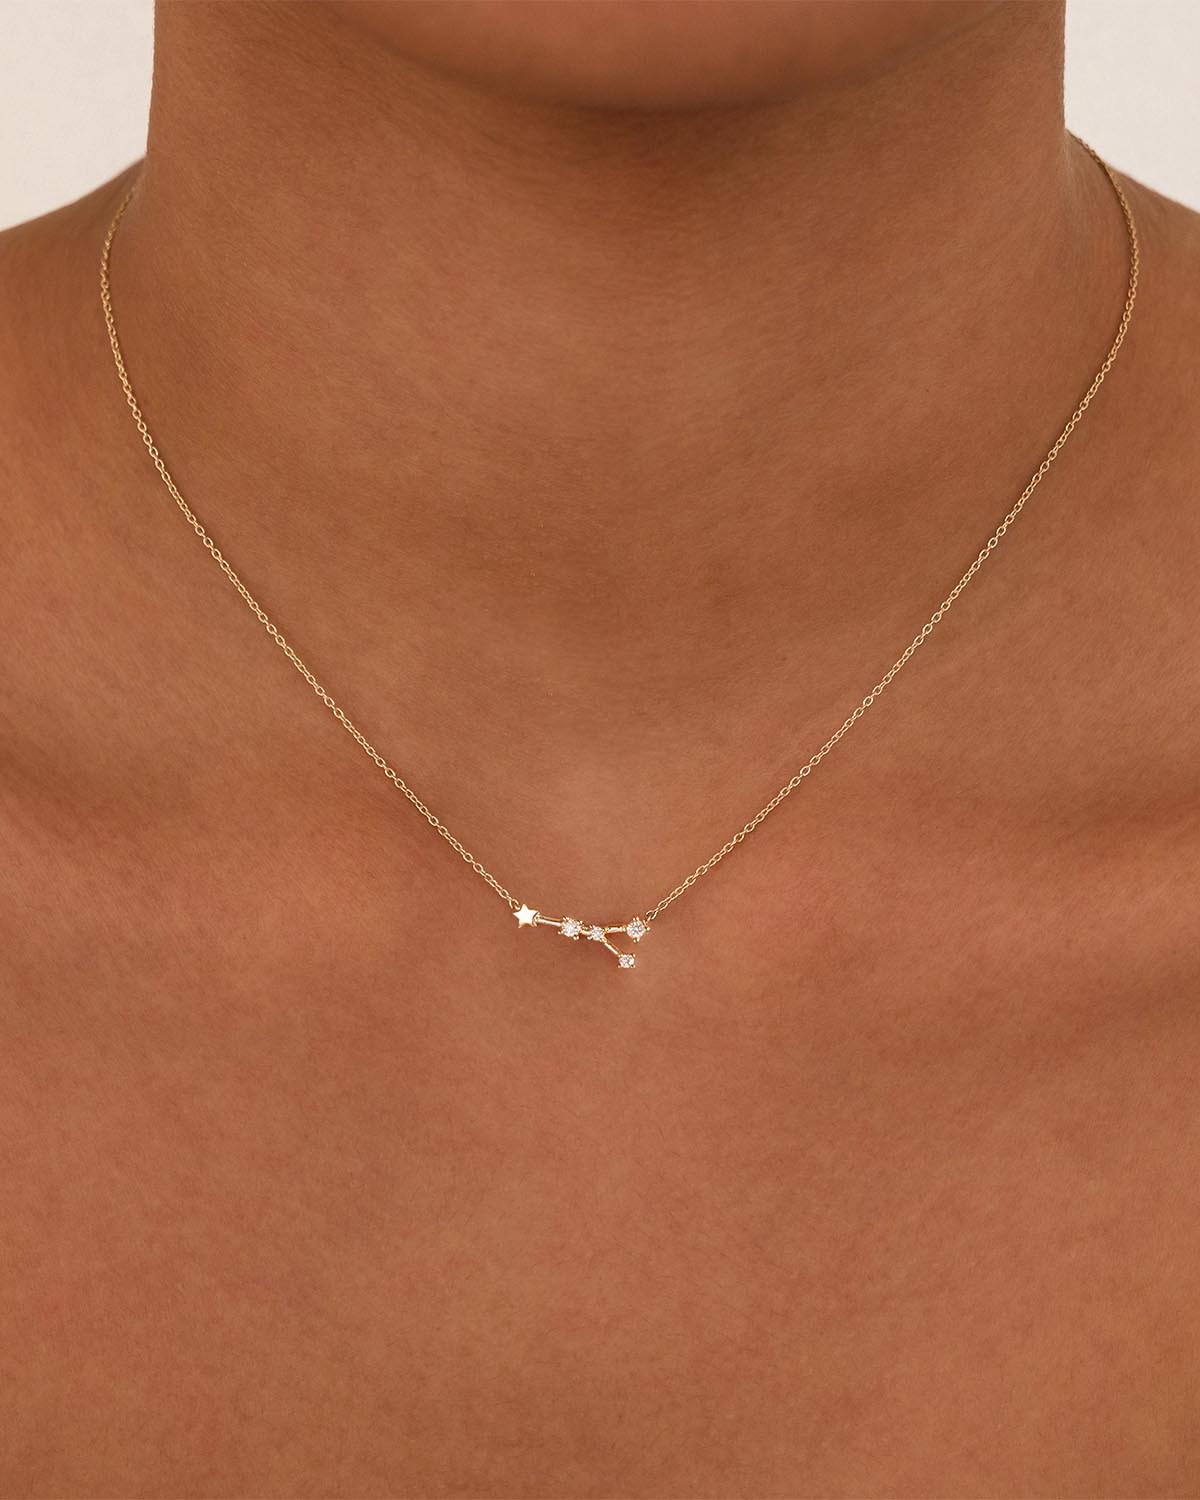 Ruby necklace - July birthstone - Cancer birthstone jewellery